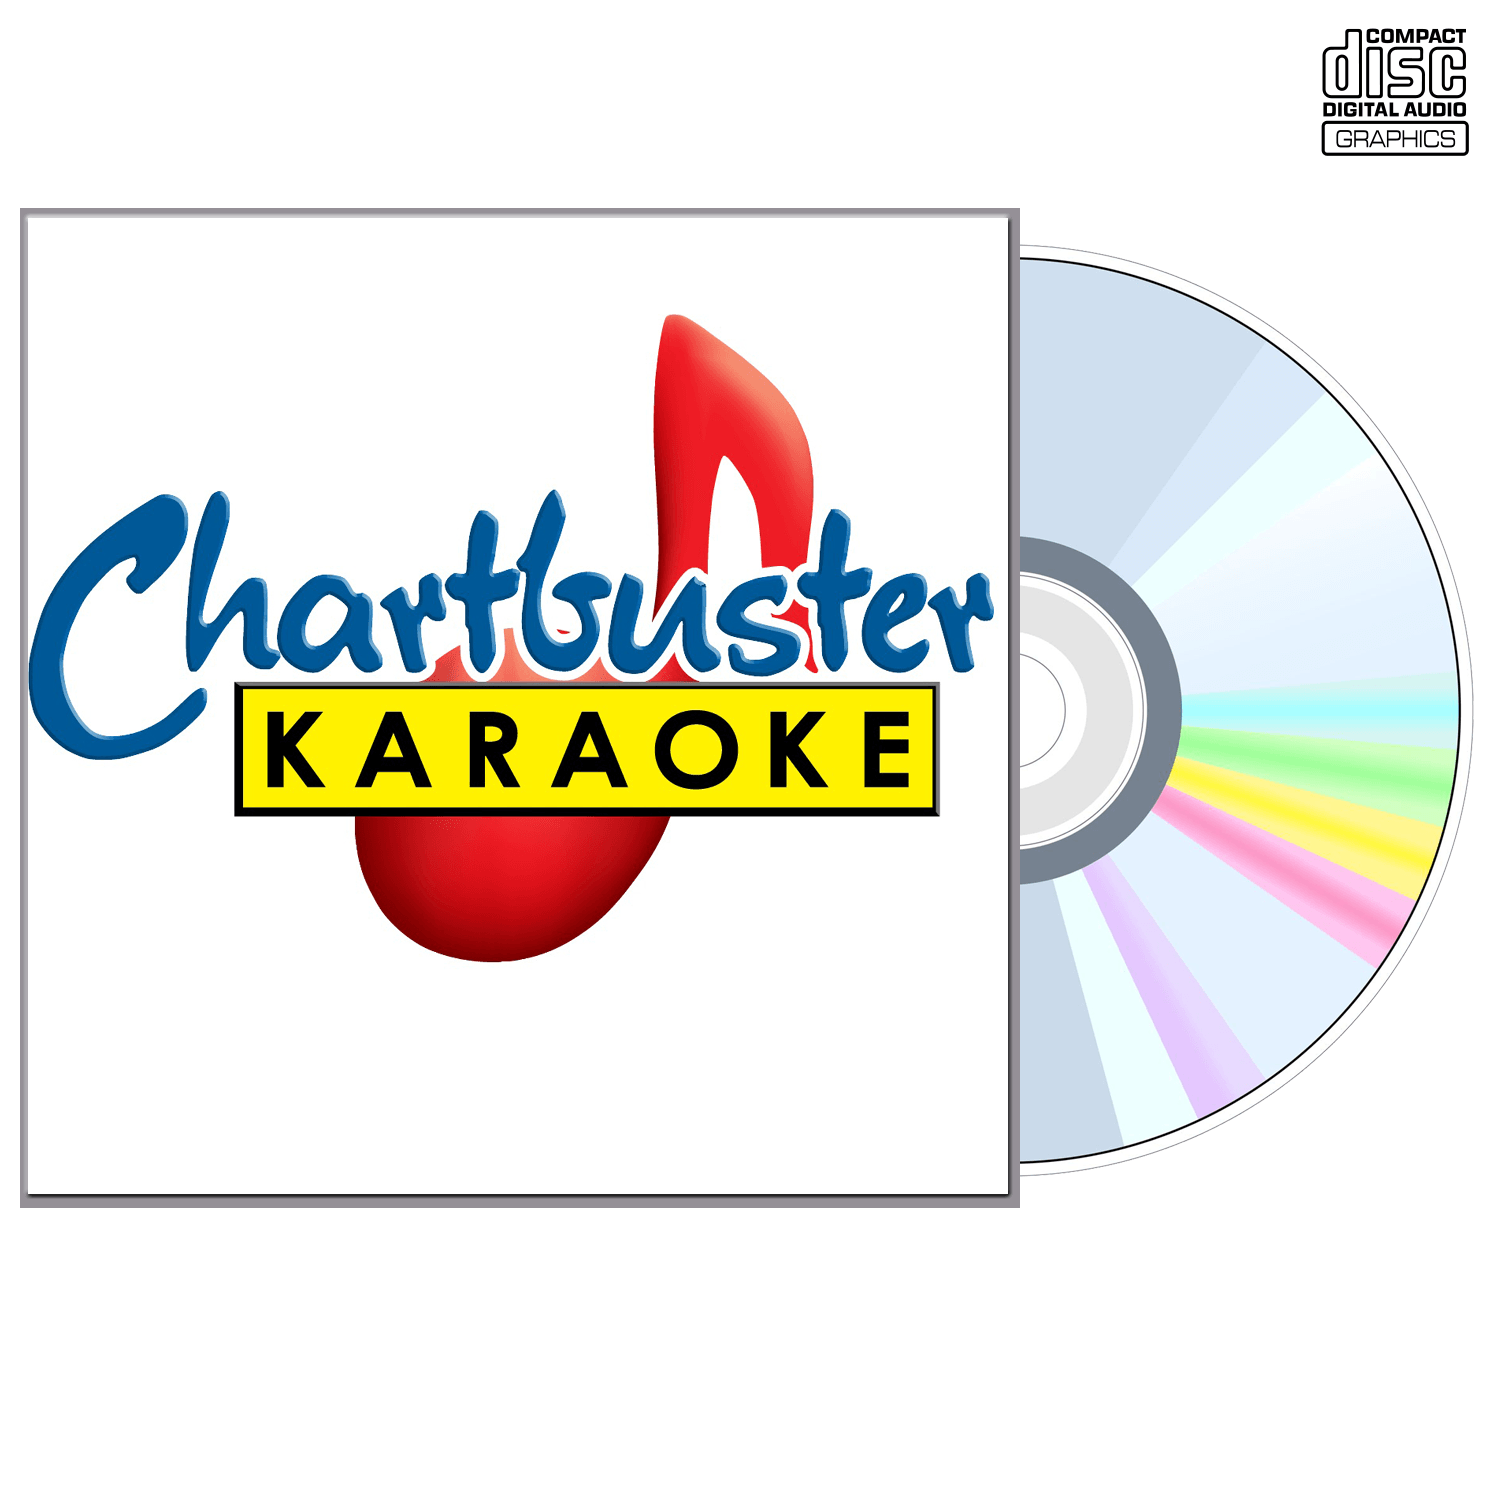 Phil Collins - CD+G - Chartbuster Karaoke - Karaoke Home Entertainment